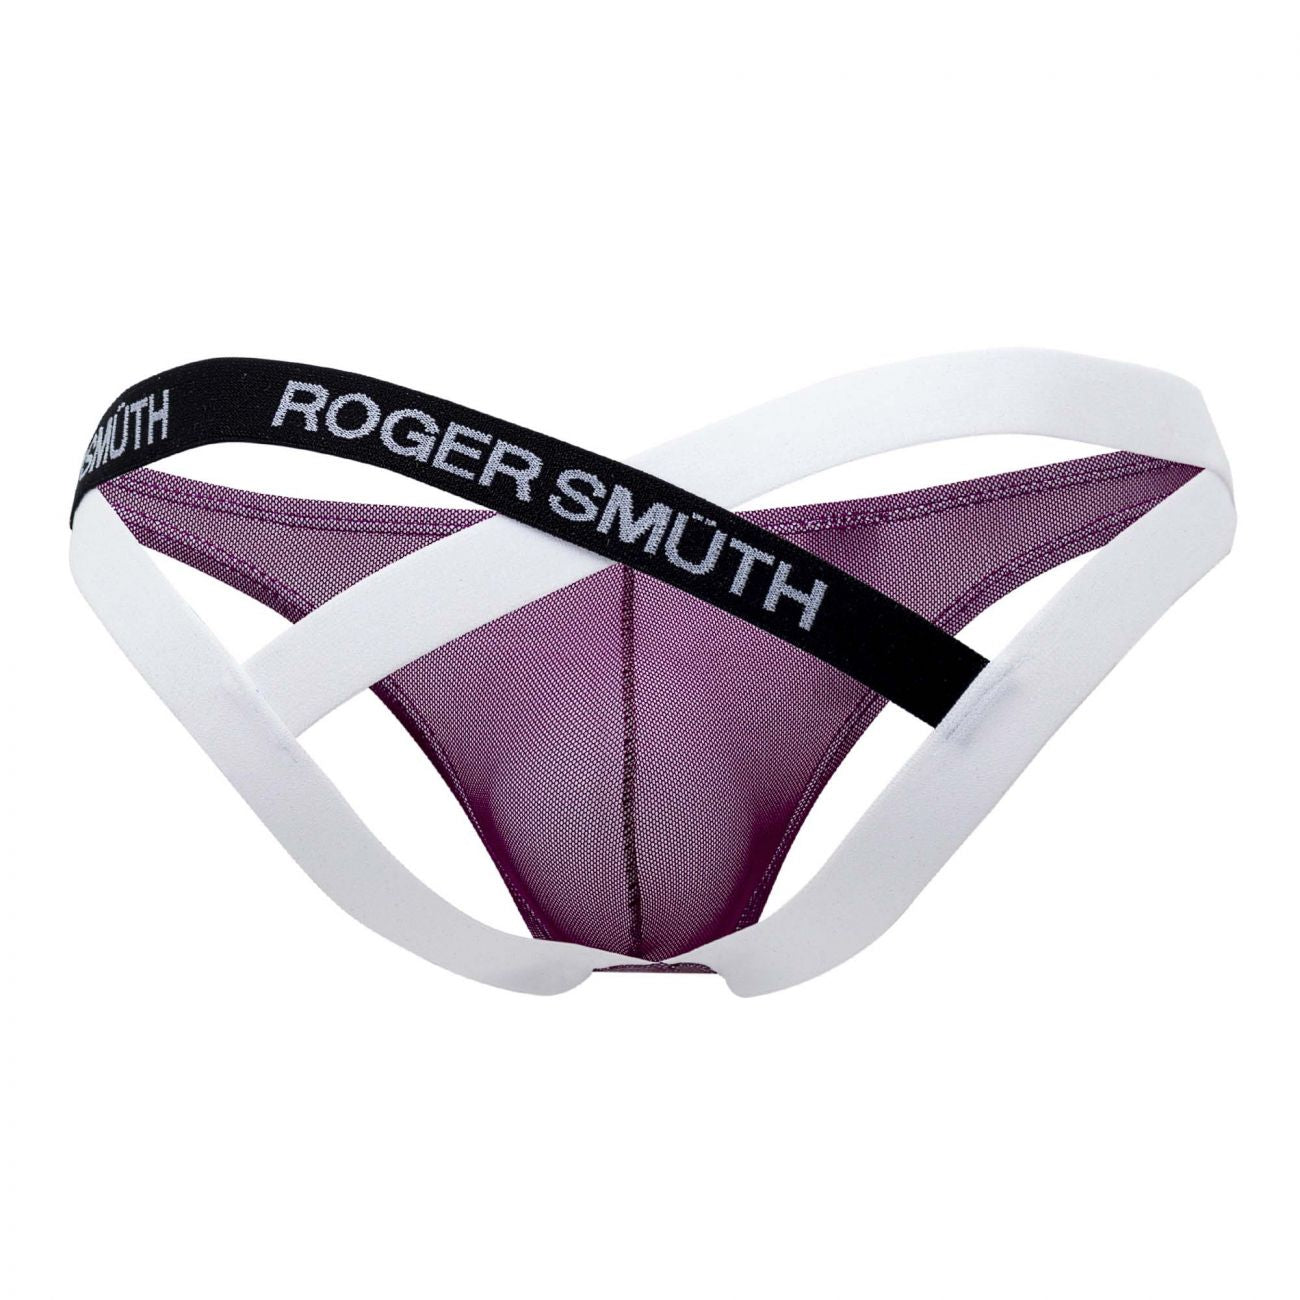 Roger Smuth RS018 Jockstrap Burgundy